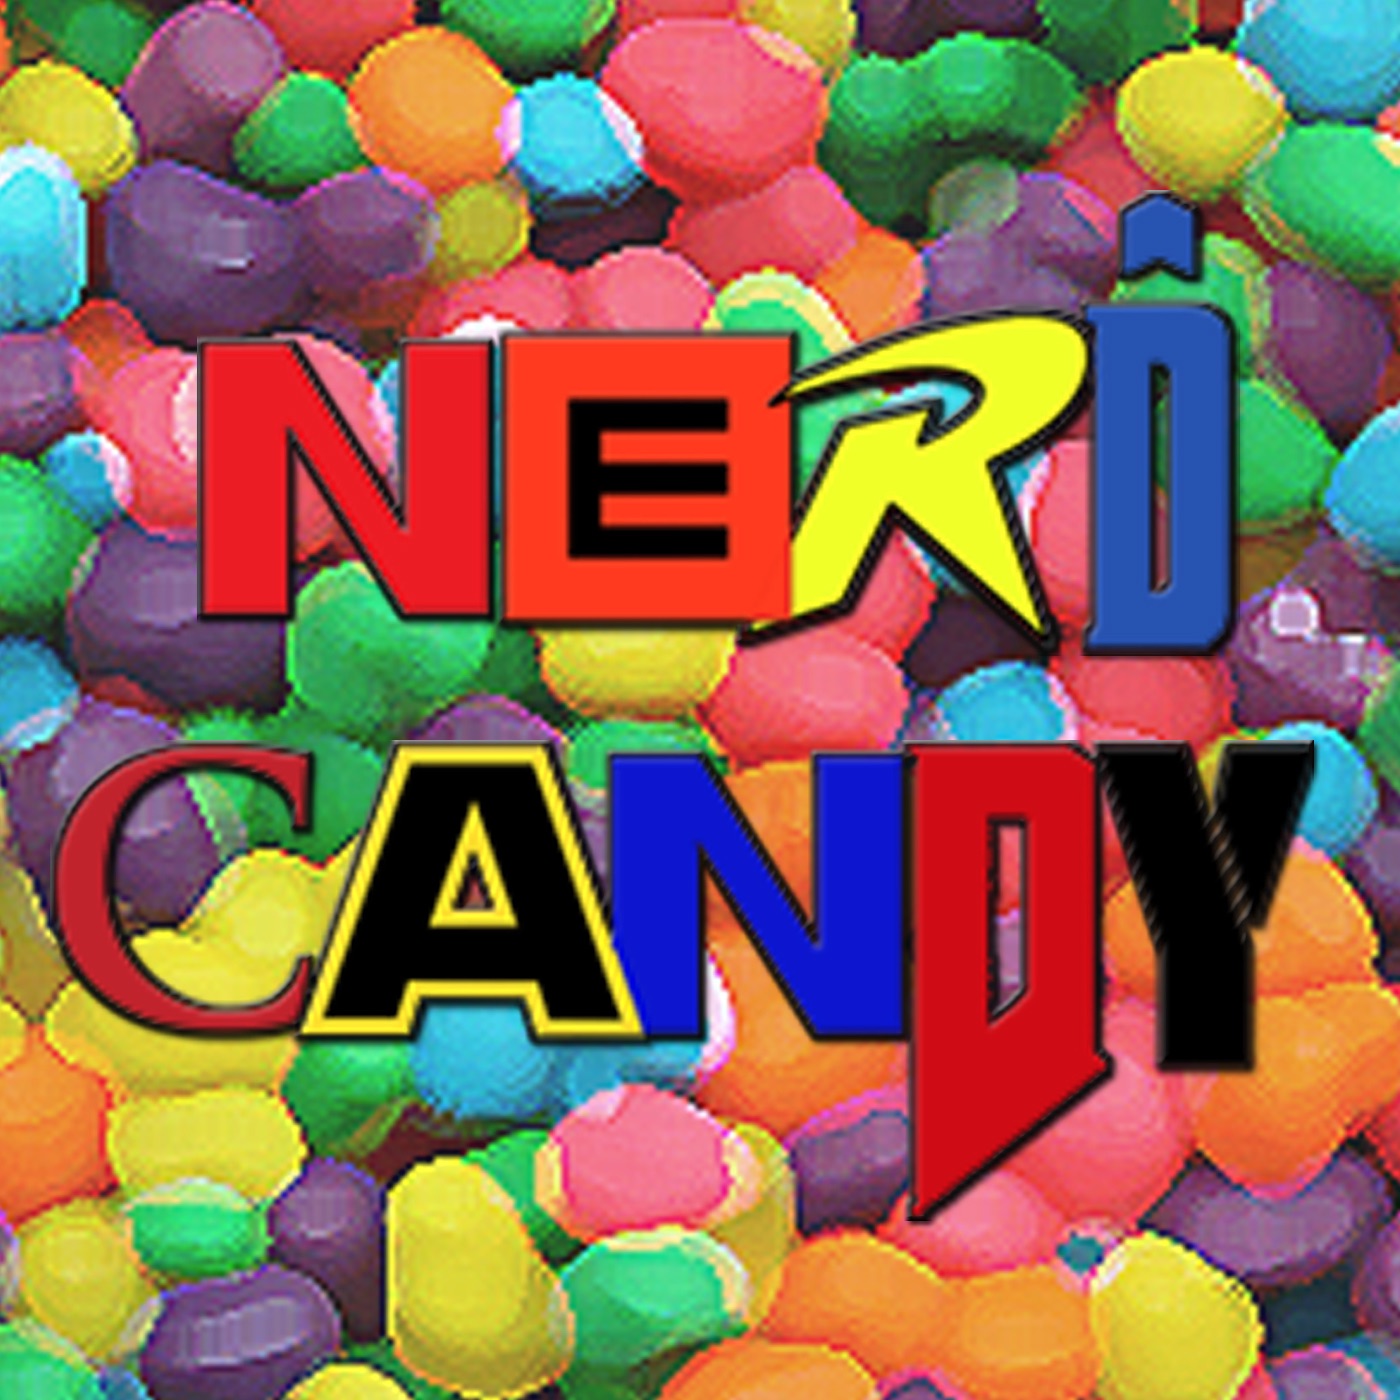 Nerd Candy